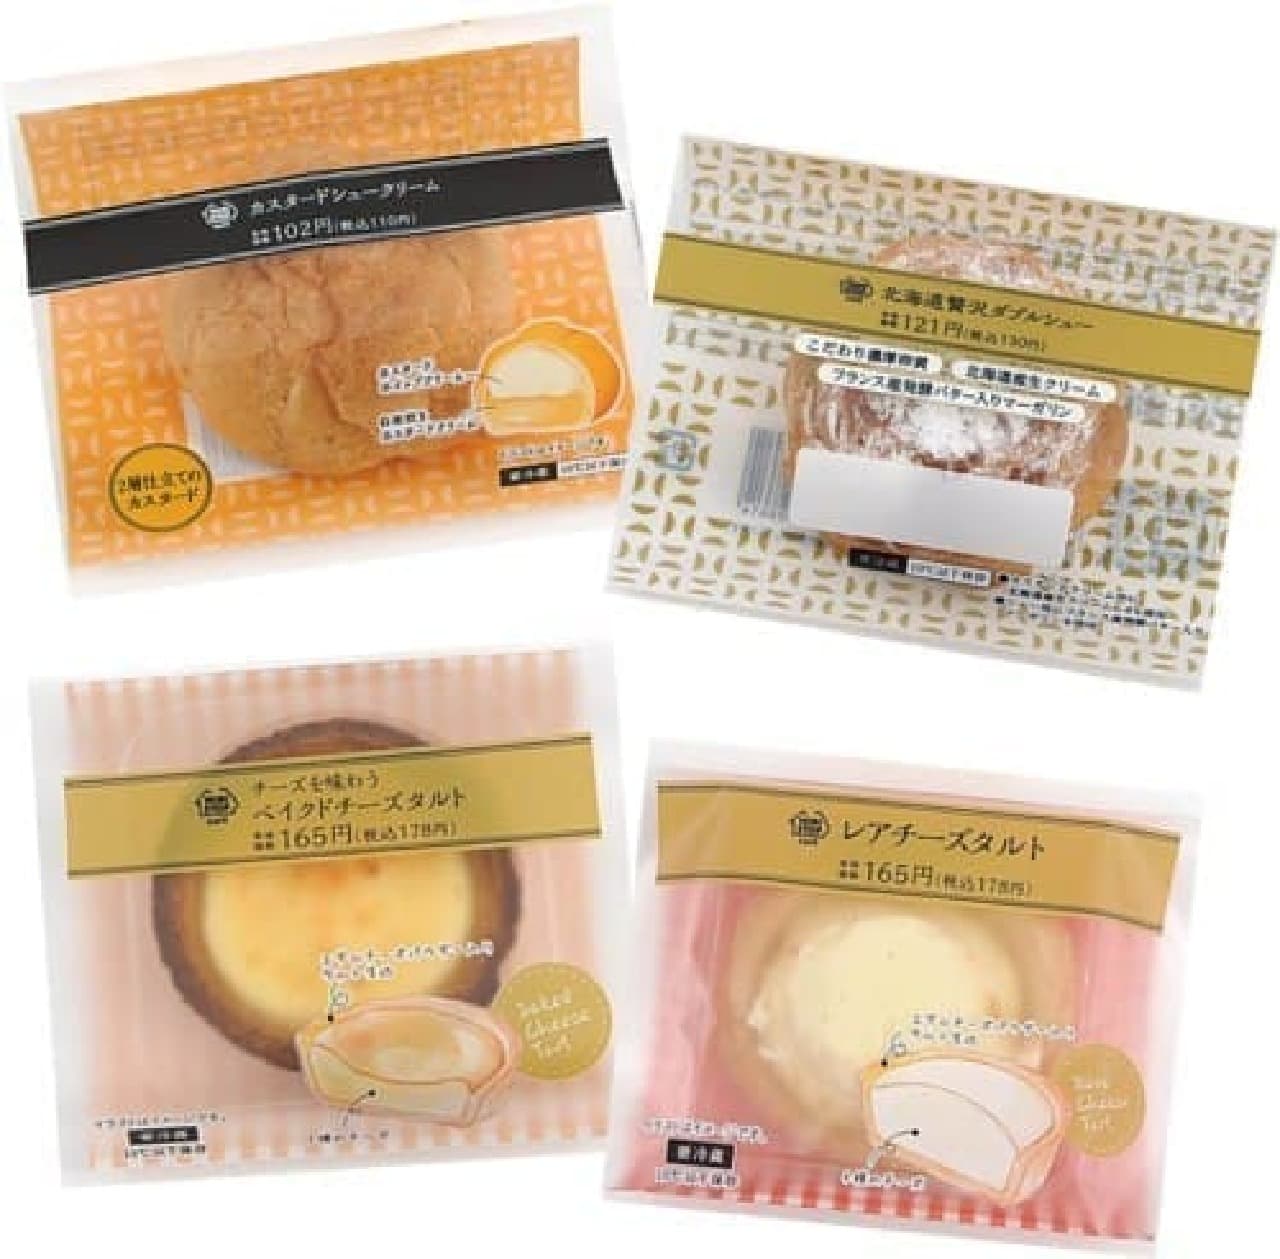 Ministop "Target sweets 20 yen discount sale"